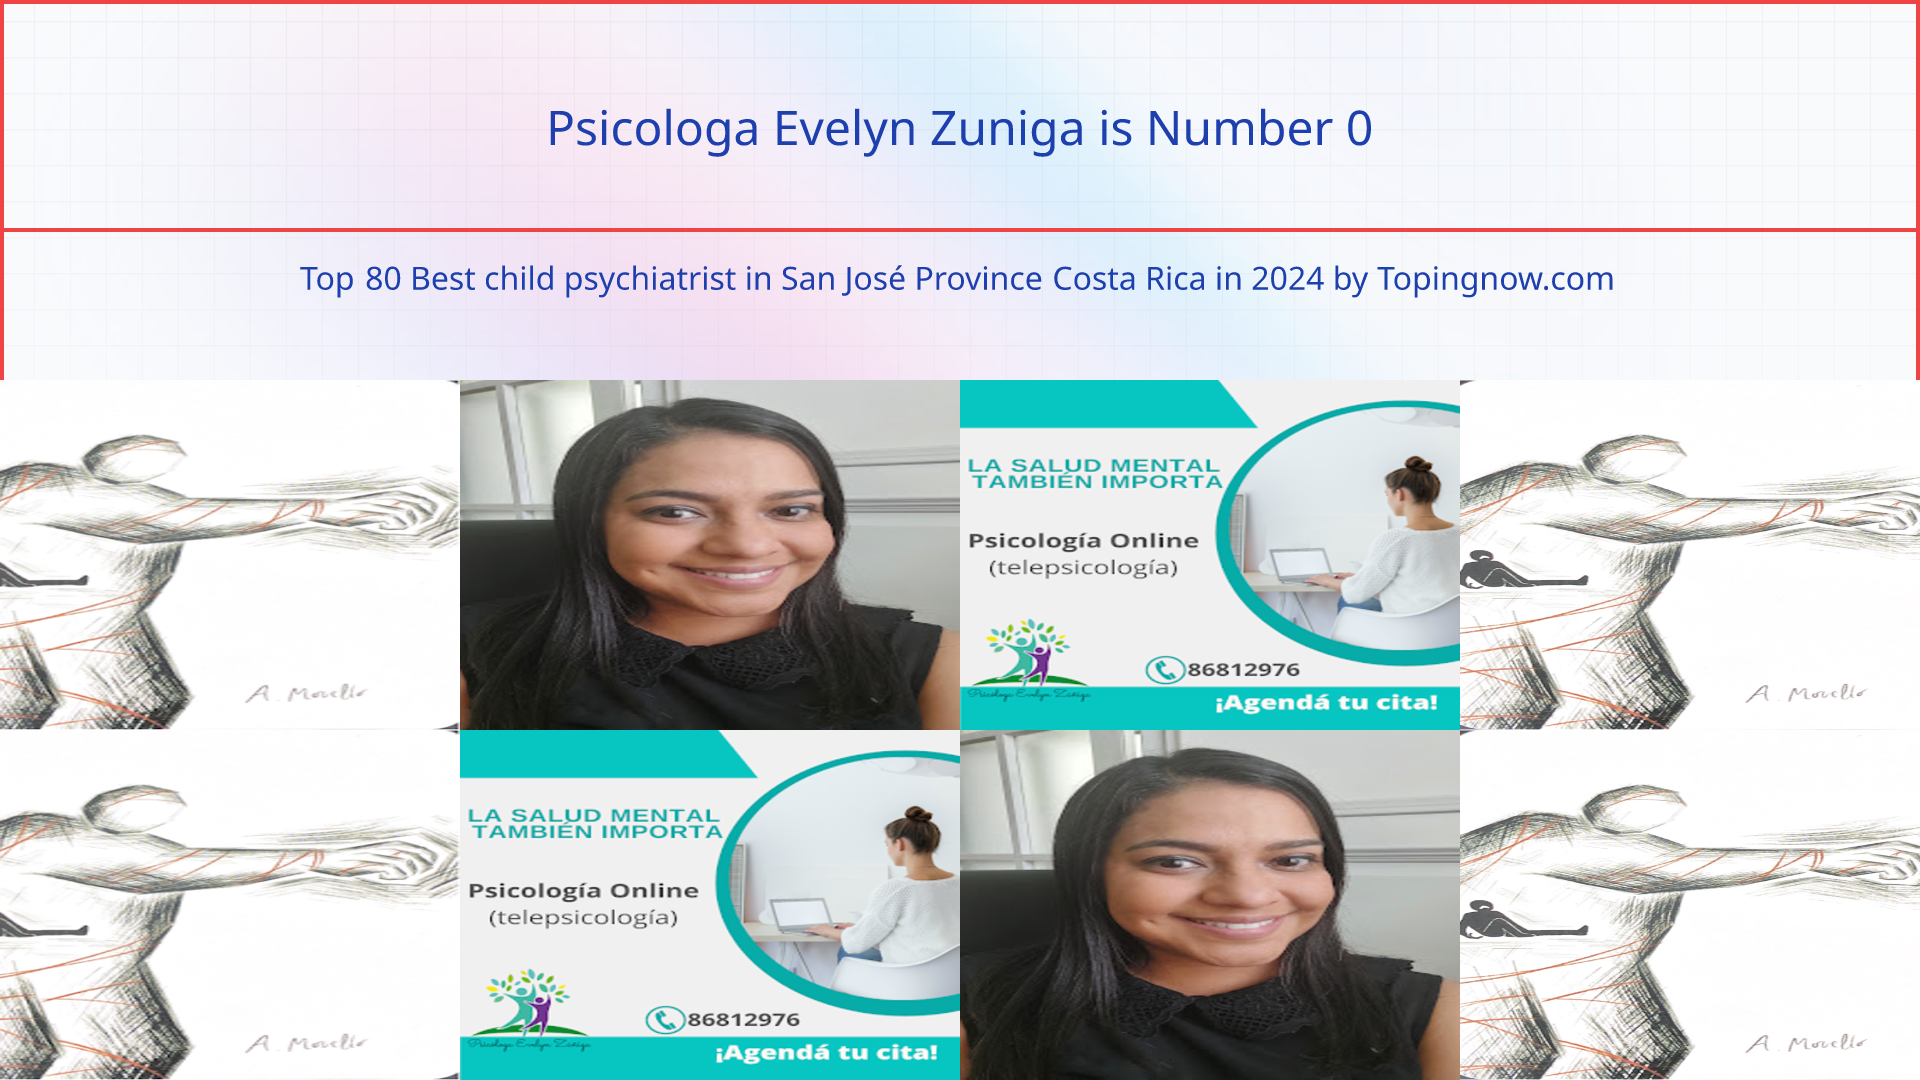 Psicologa Evelyn Zuniga: Top 80 Best child psychiatrist in San José Province Costa Rica in 2024